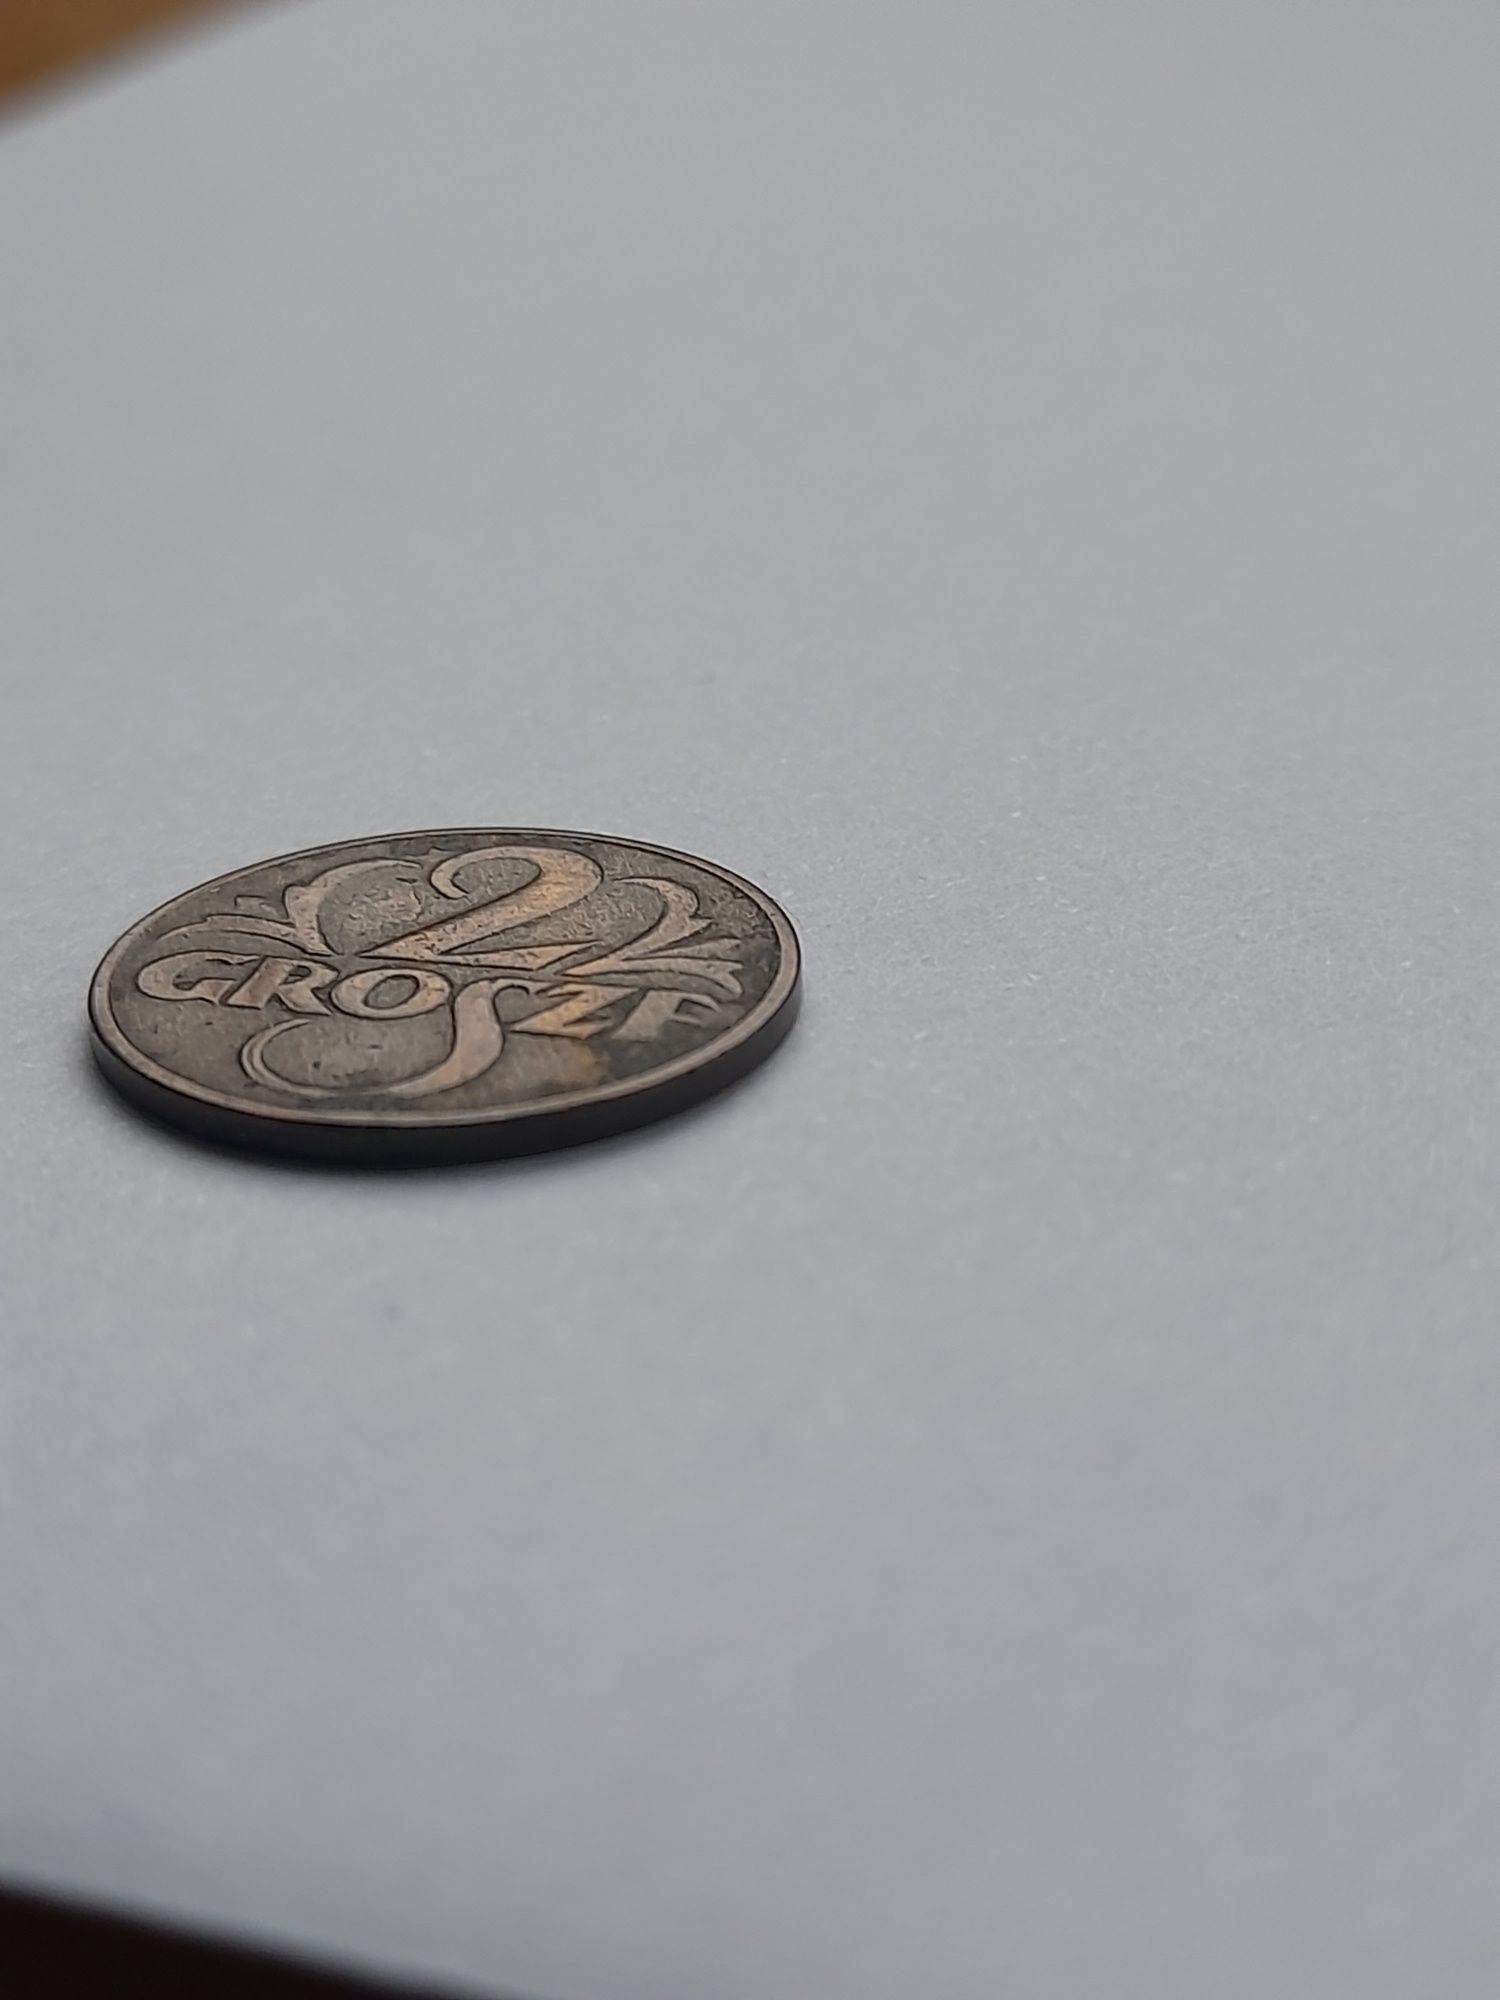 Moneta 2 grosze z 1934 roku.